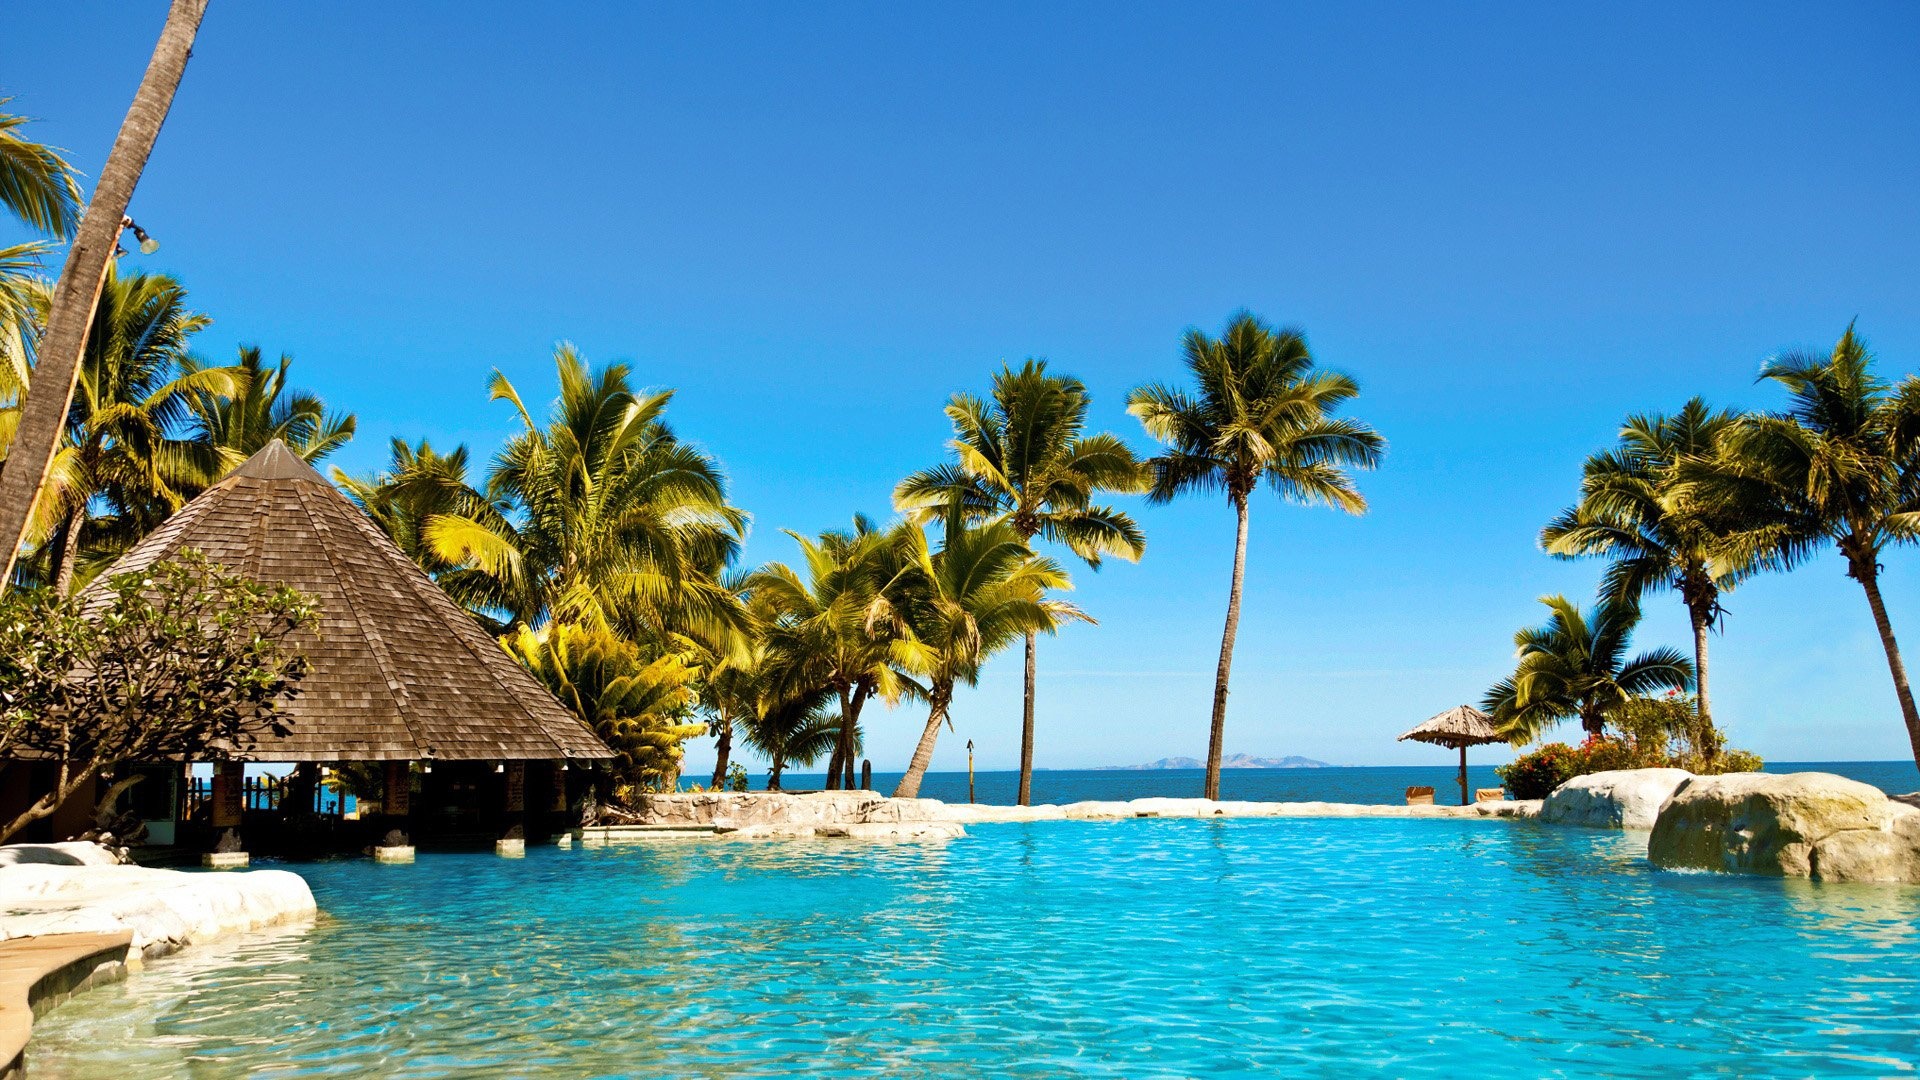 Fiji: Viti Levu has an area of about 4,000 square miles. 1920x1080 Full HD Background.